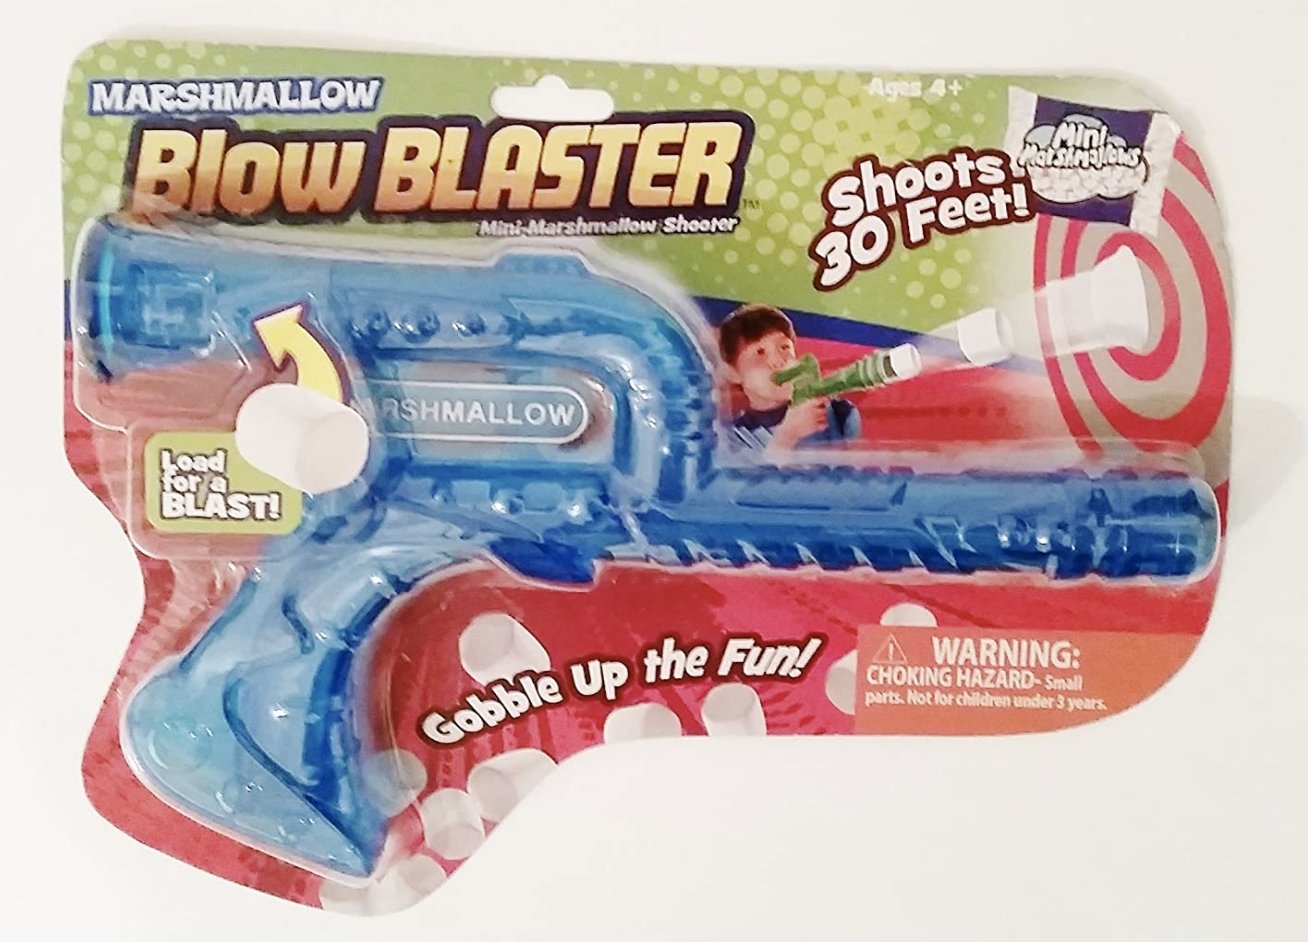 Marshmallow Blowblaster